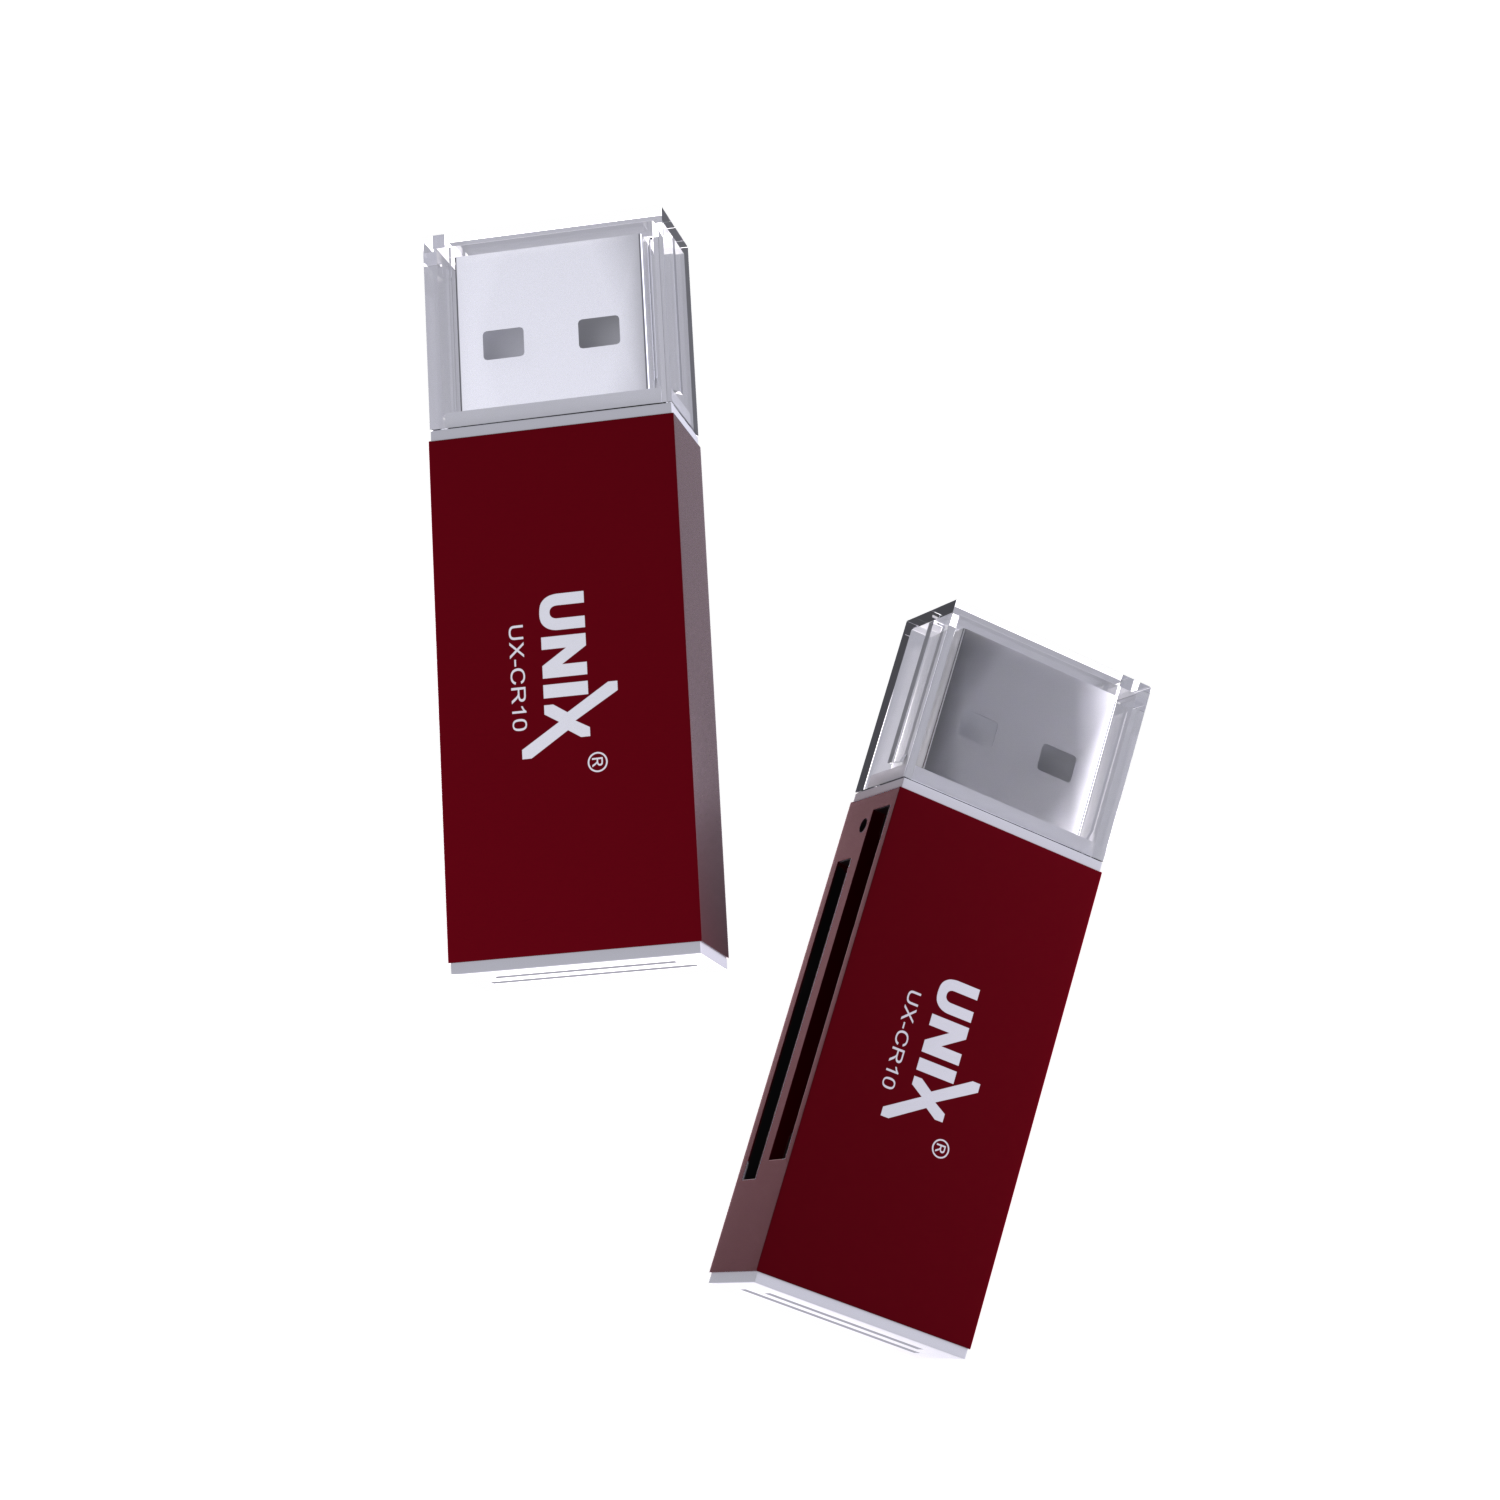 Unix UX-CR10 Card Reader | USB 3.0, High-Speed Data Transfer right